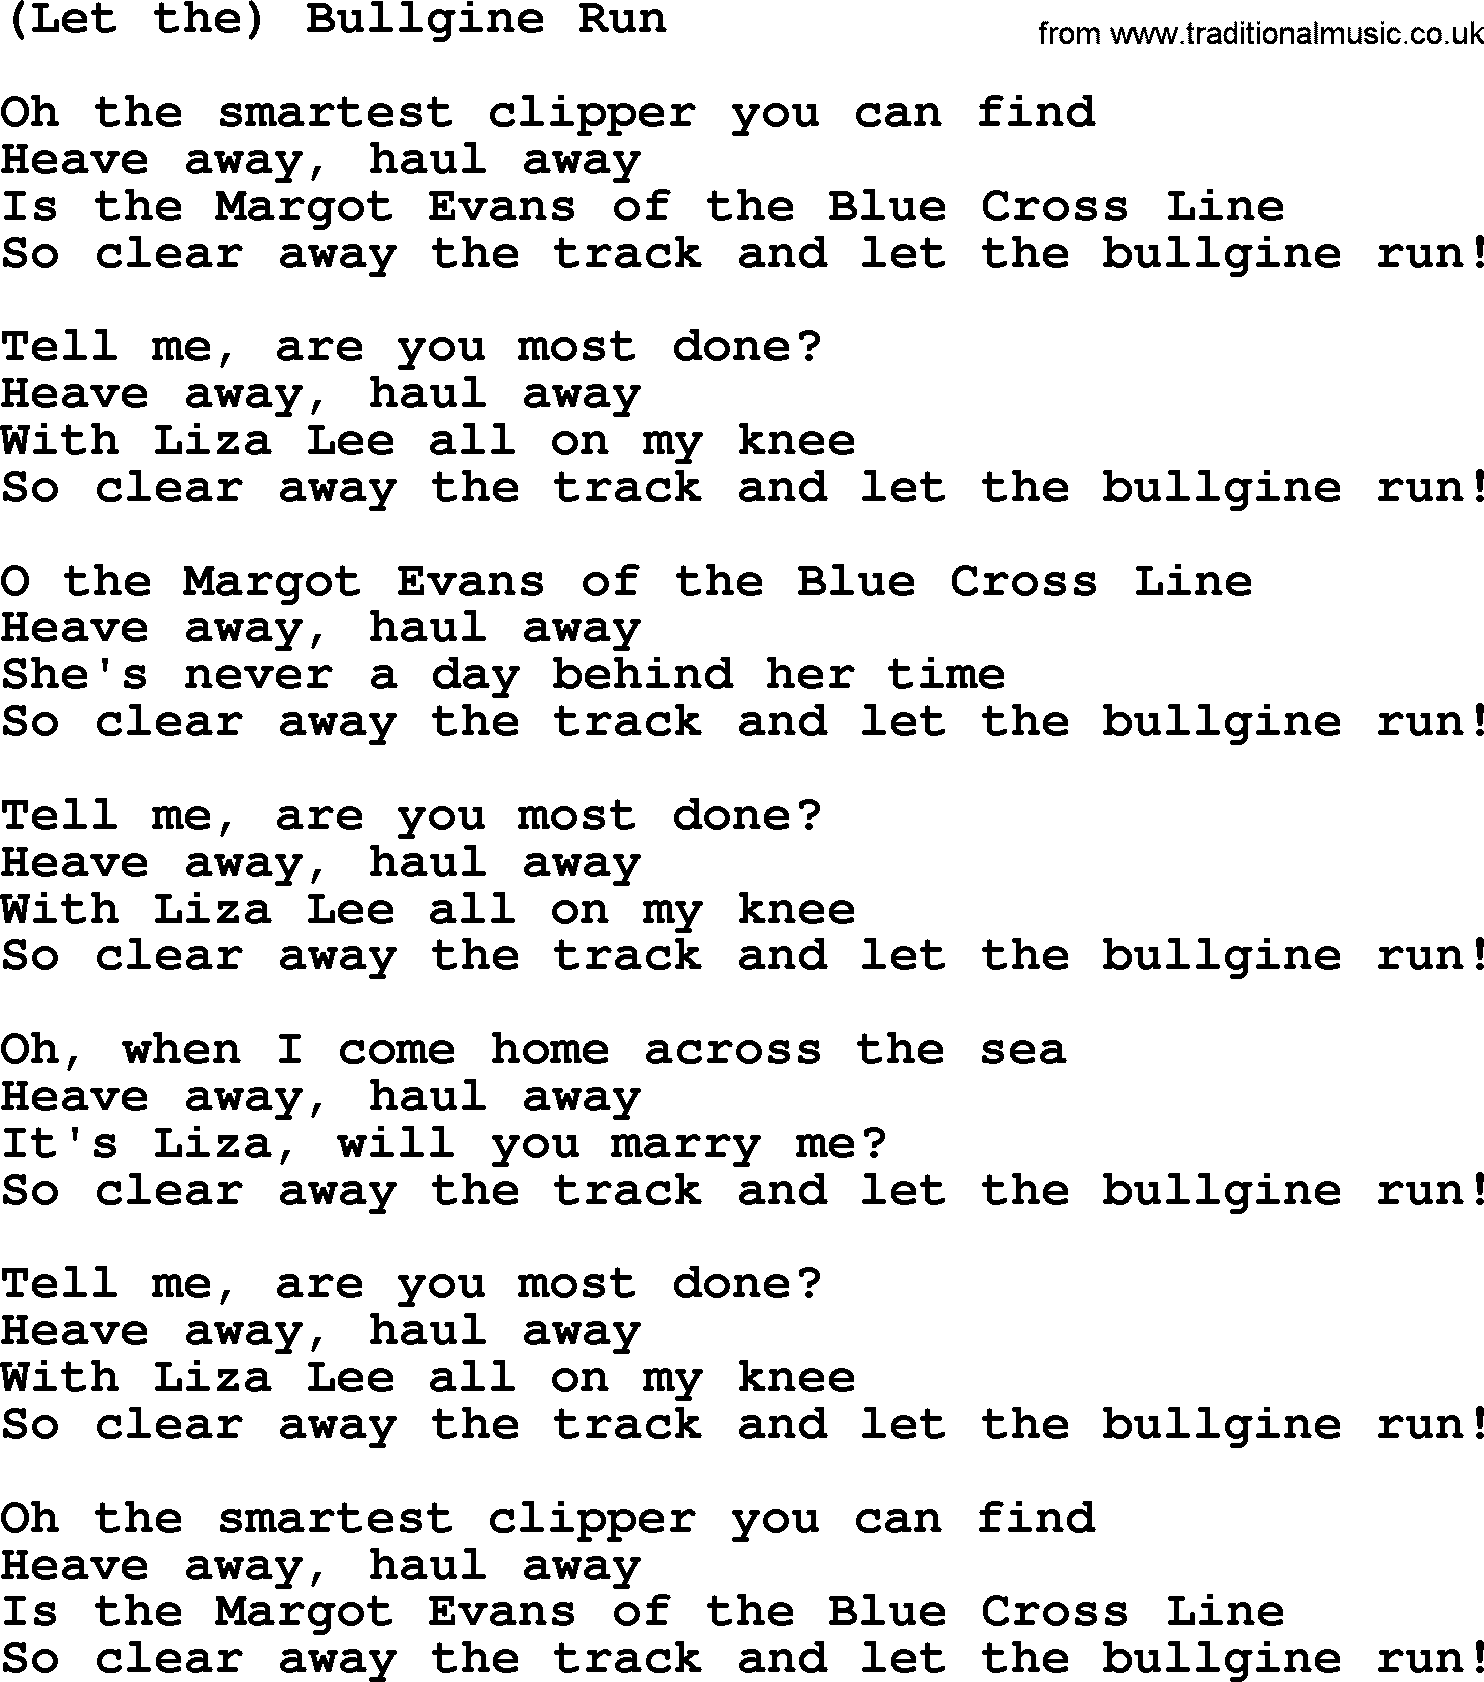 The Byrds song Let The Bullgine Run, lyrics